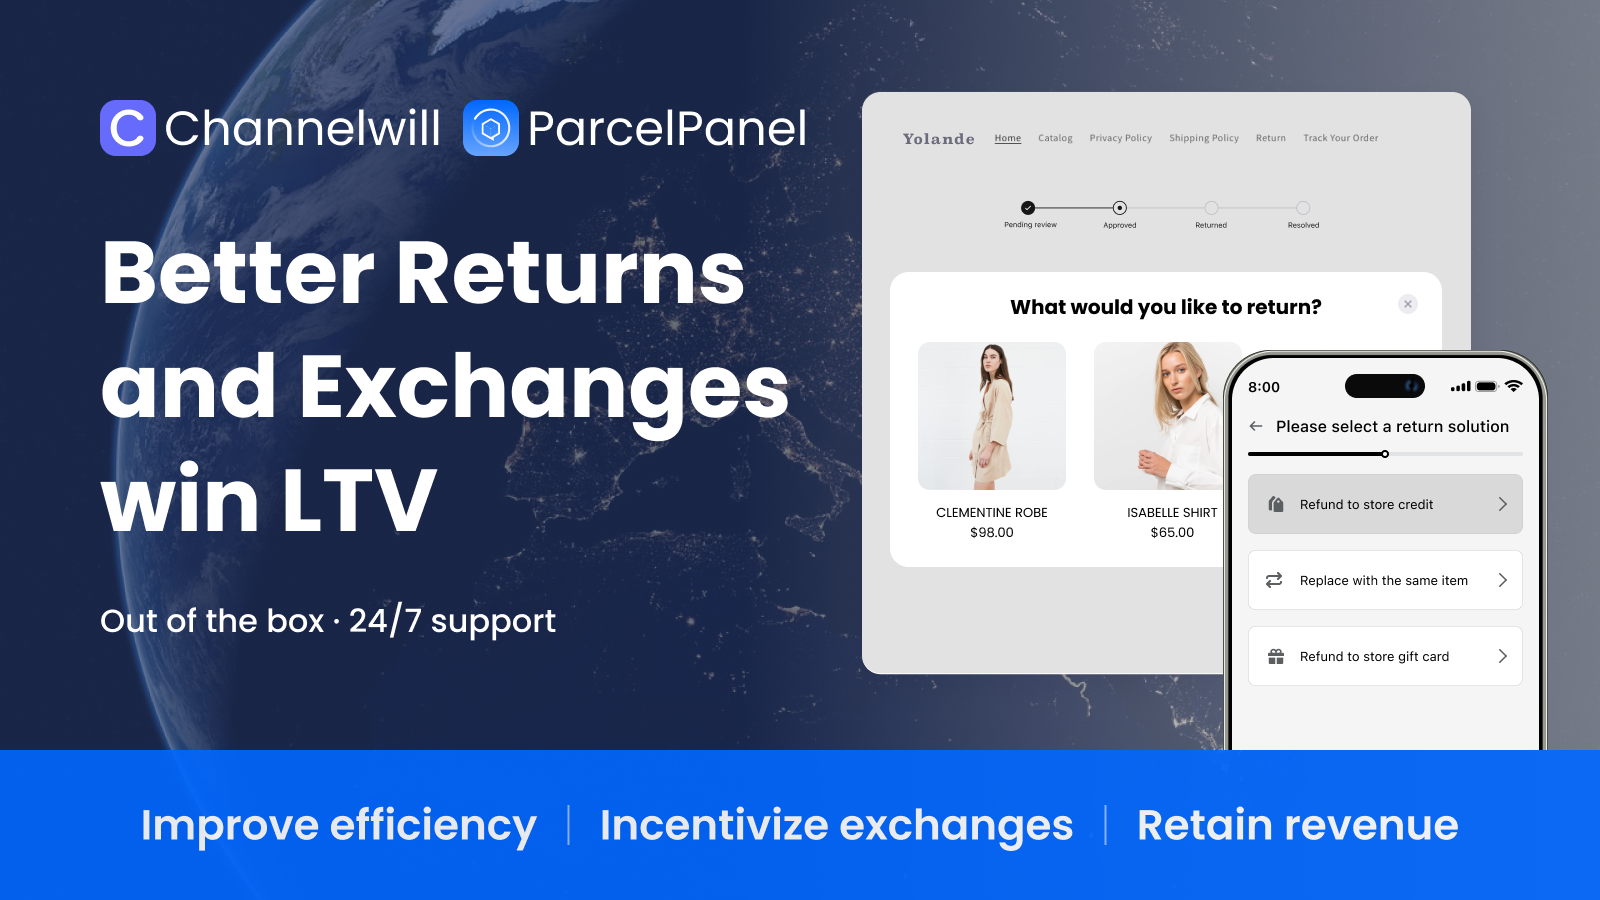 parcelpanel-returns-exchange-overview